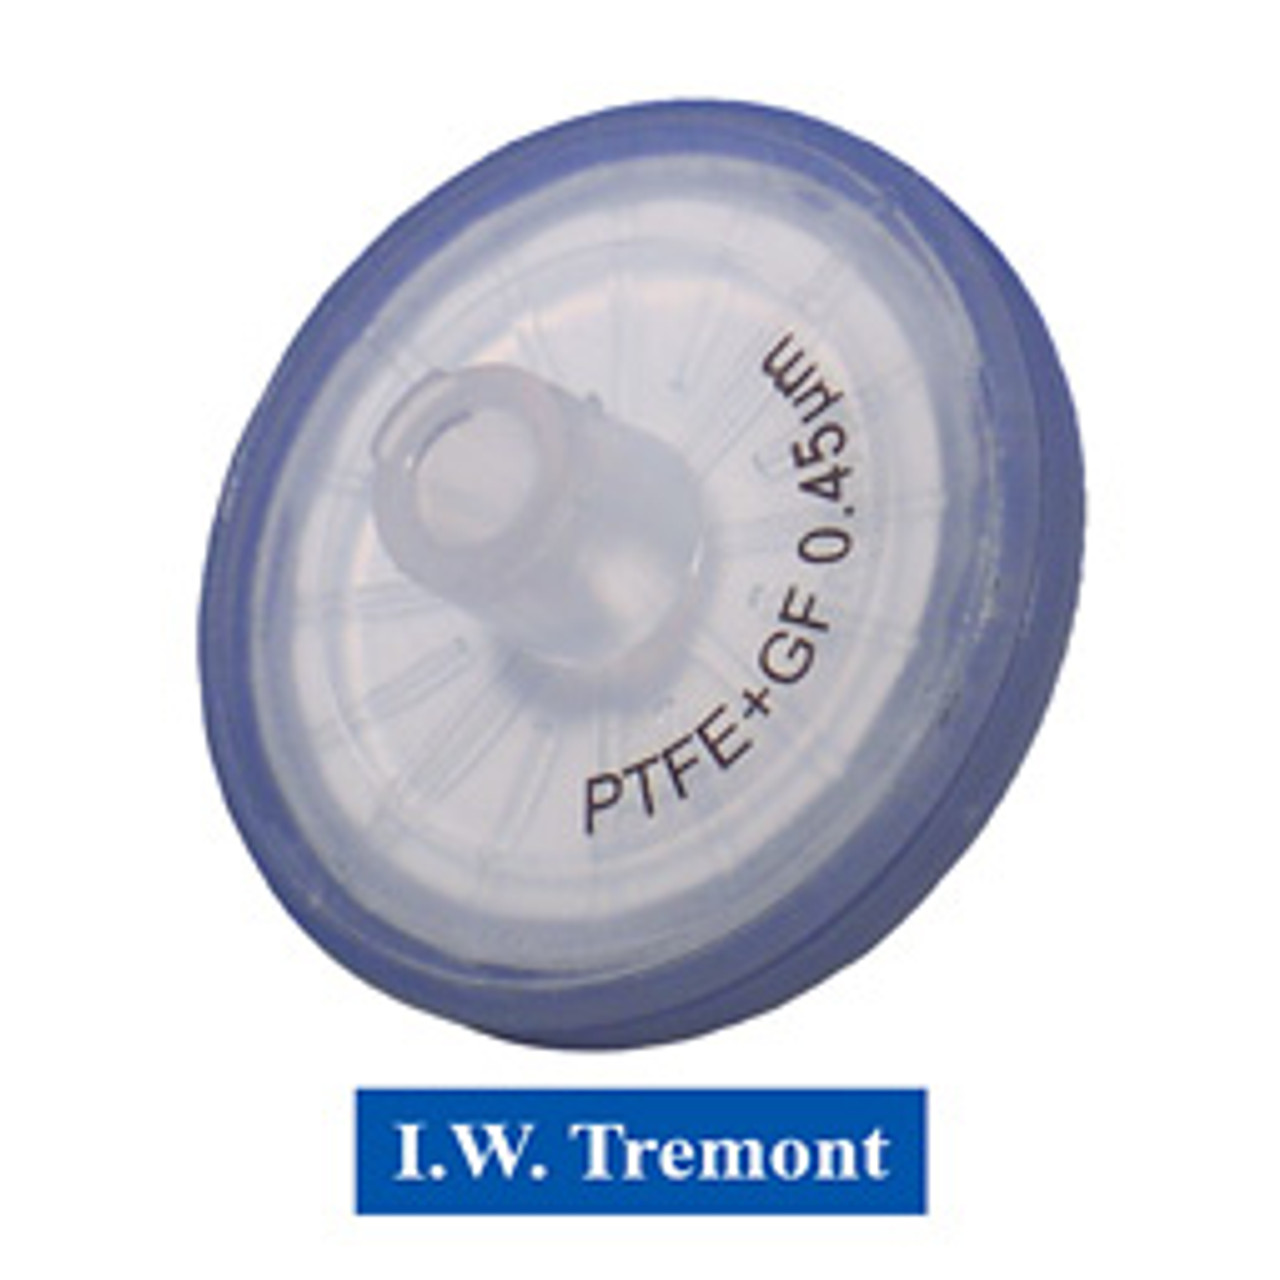 Sterile Hydrophobic PTFE Syringe Filters, Choose Size, pack/100